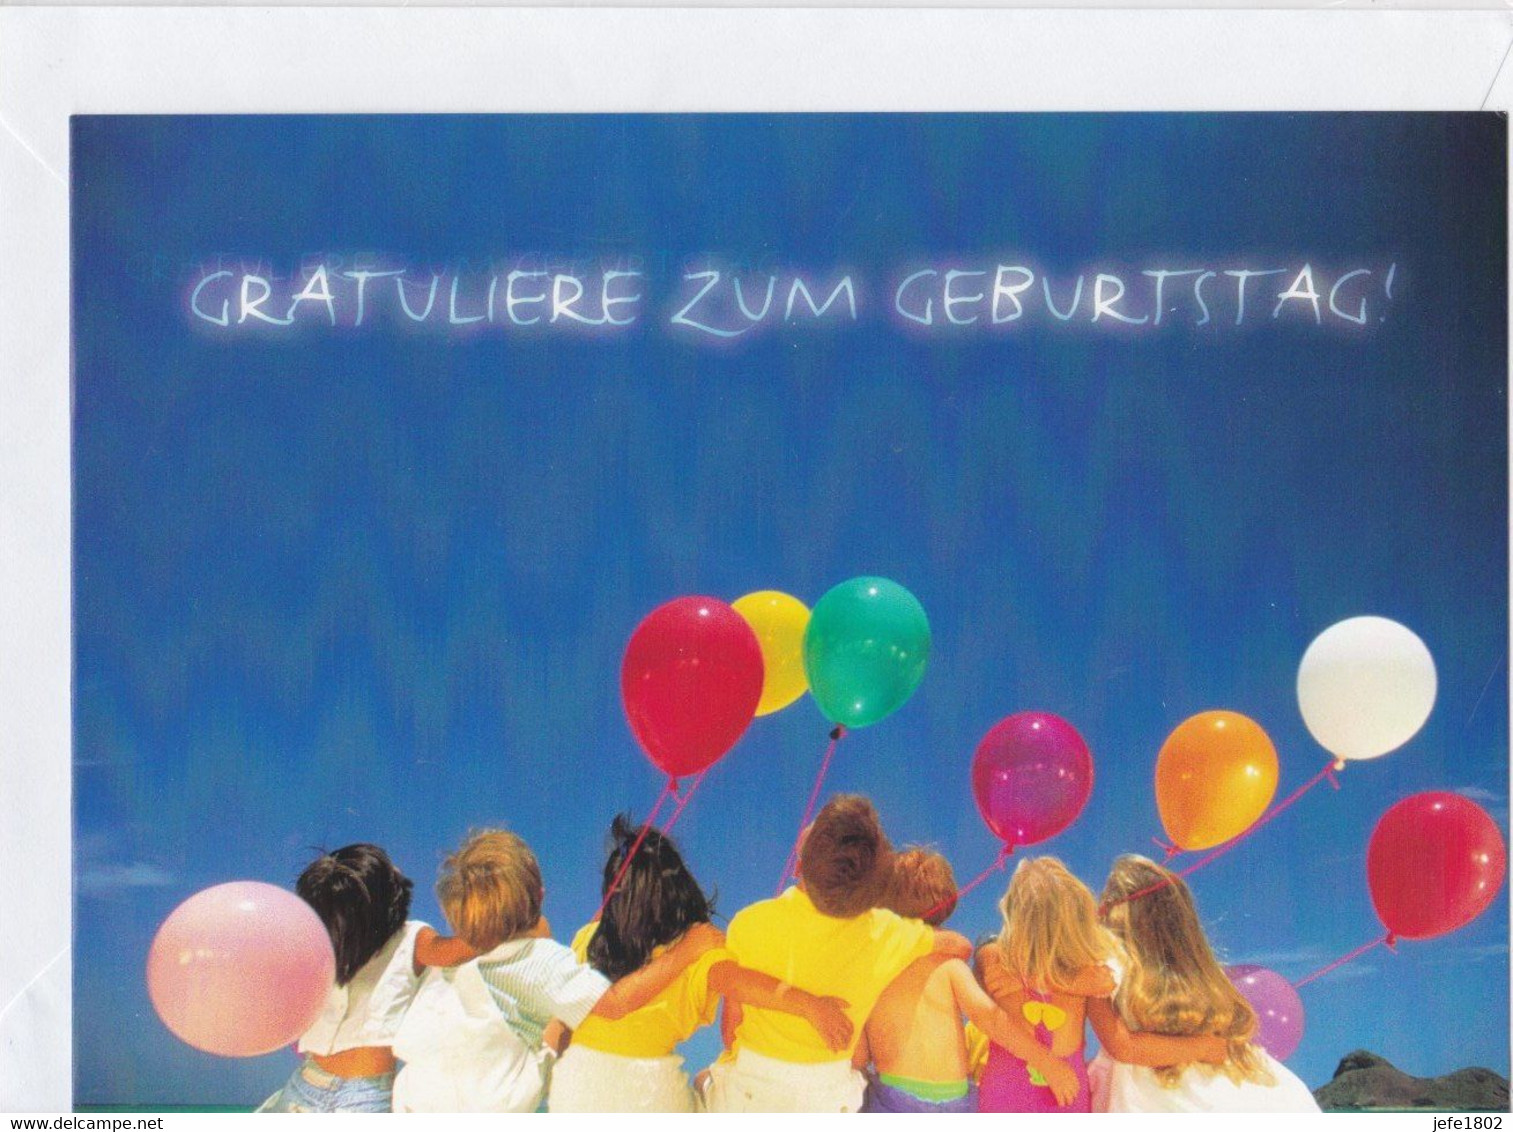 Postogram 166 D  / 00 - Gratuliere Zum Geburtstag ! - Balloons - Postogram